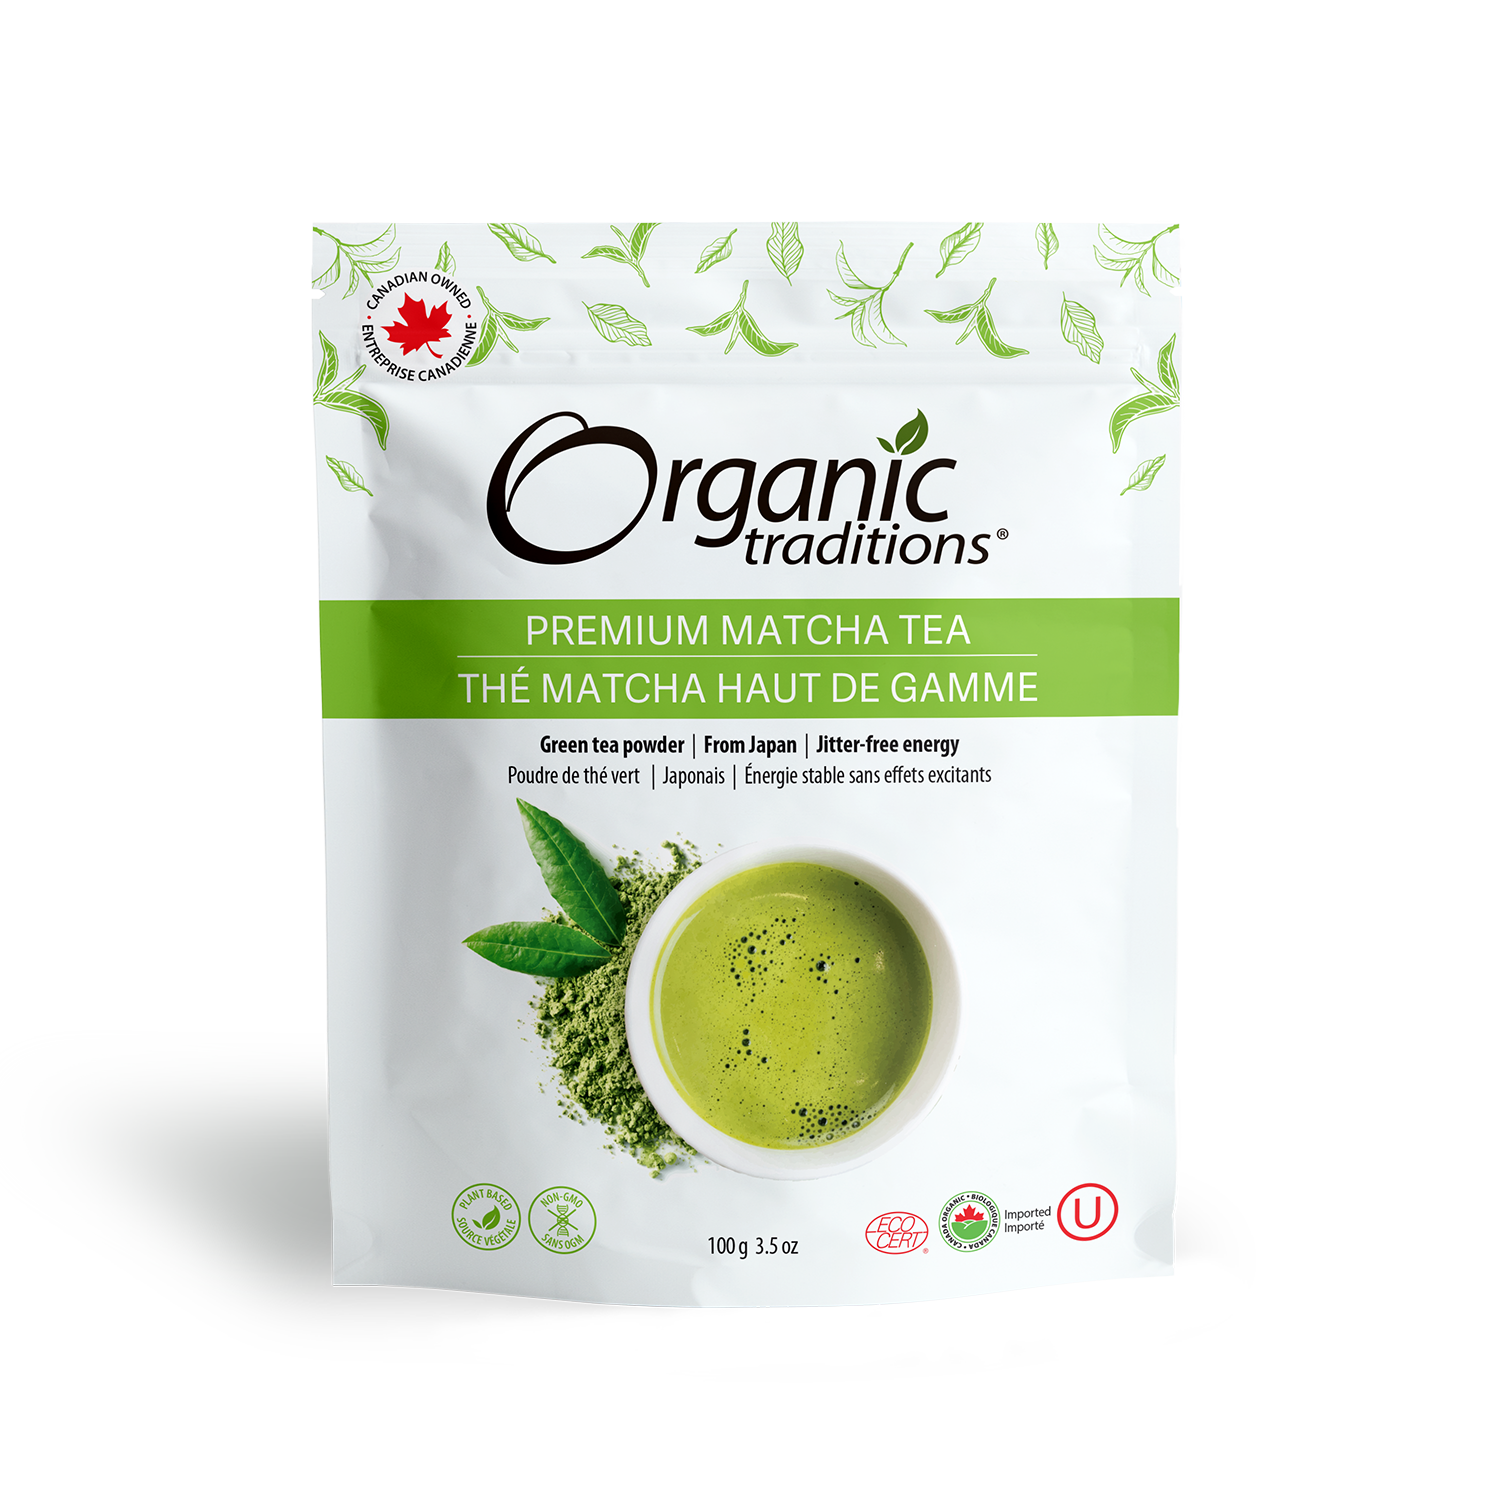 organic traditions premium matcha tea front of bag image